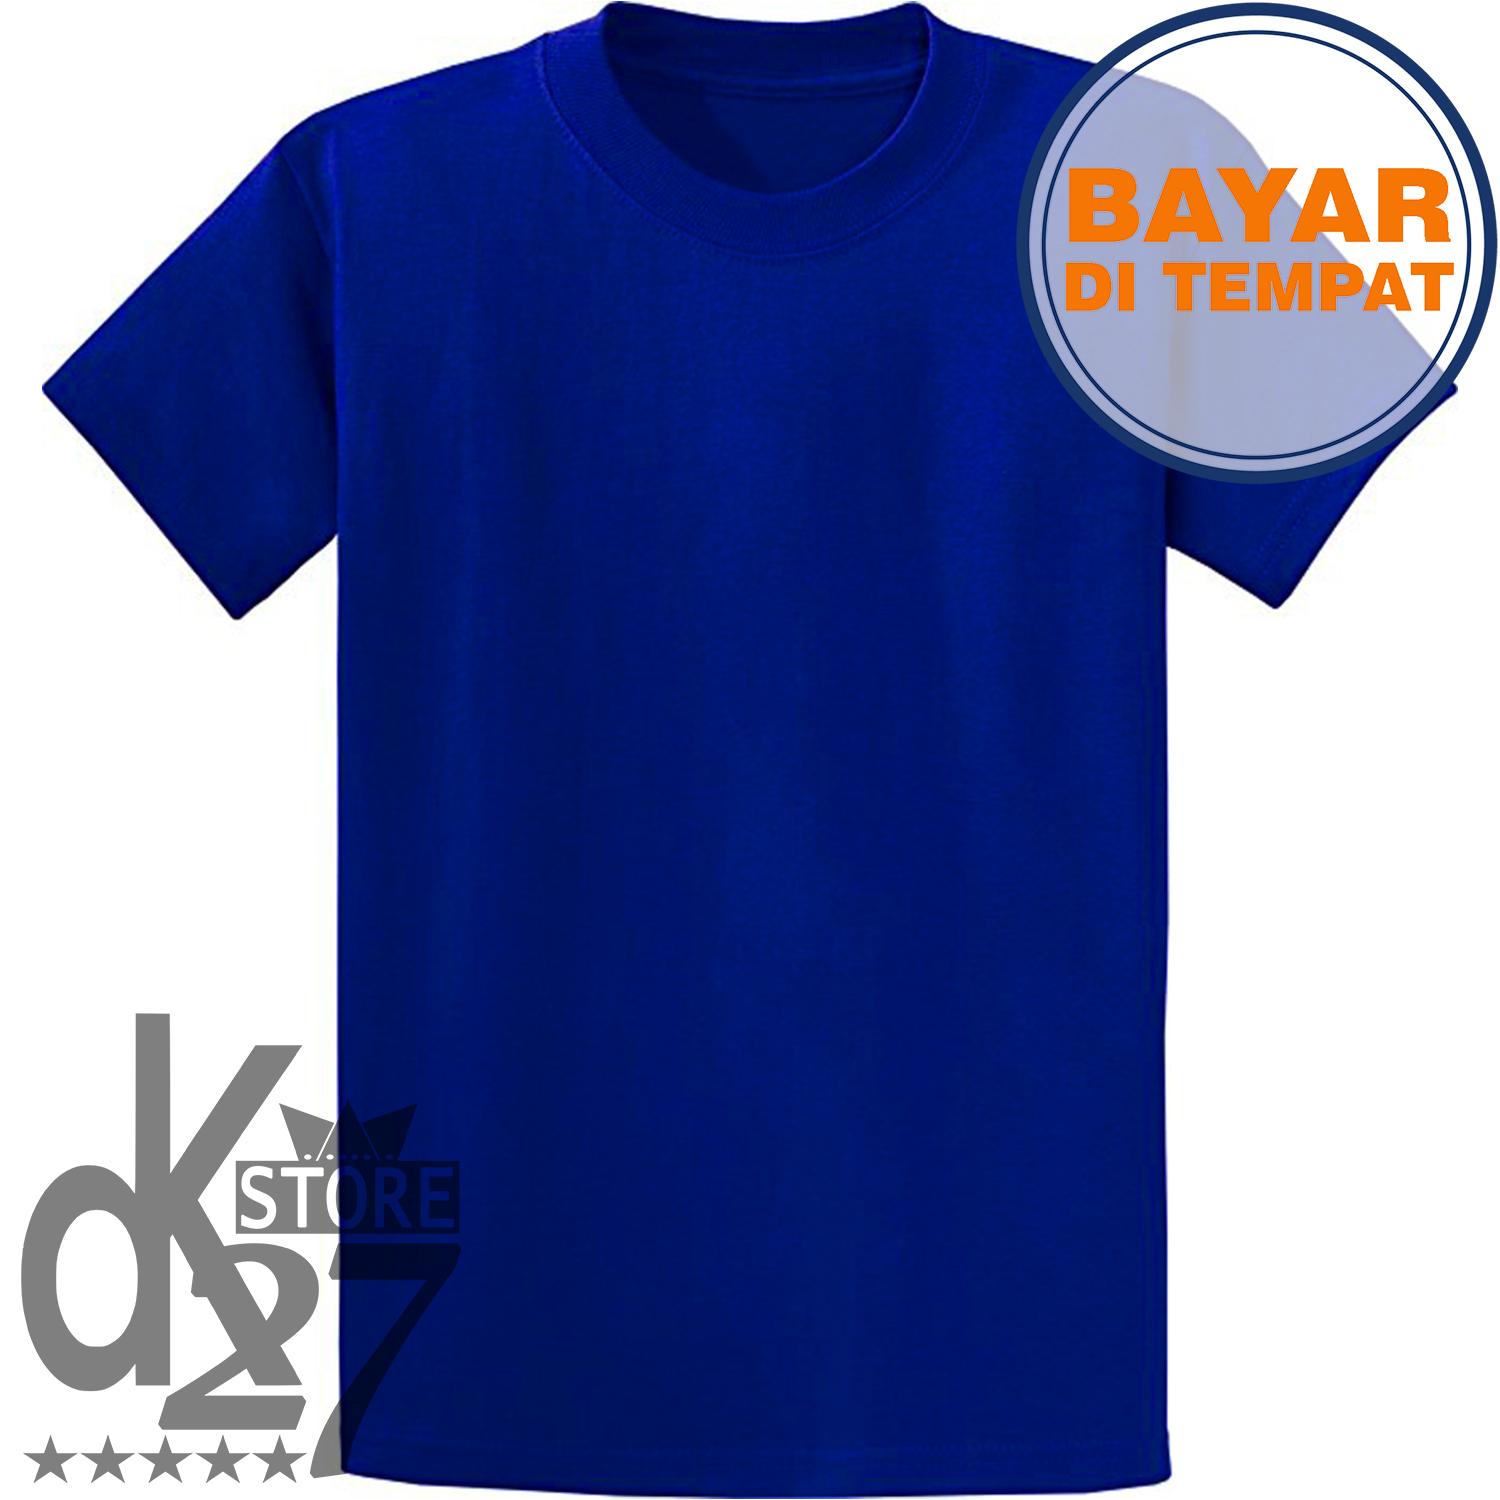 Download Gambar Kaos Polos Depan Belakang Warna Biru Dongker ...